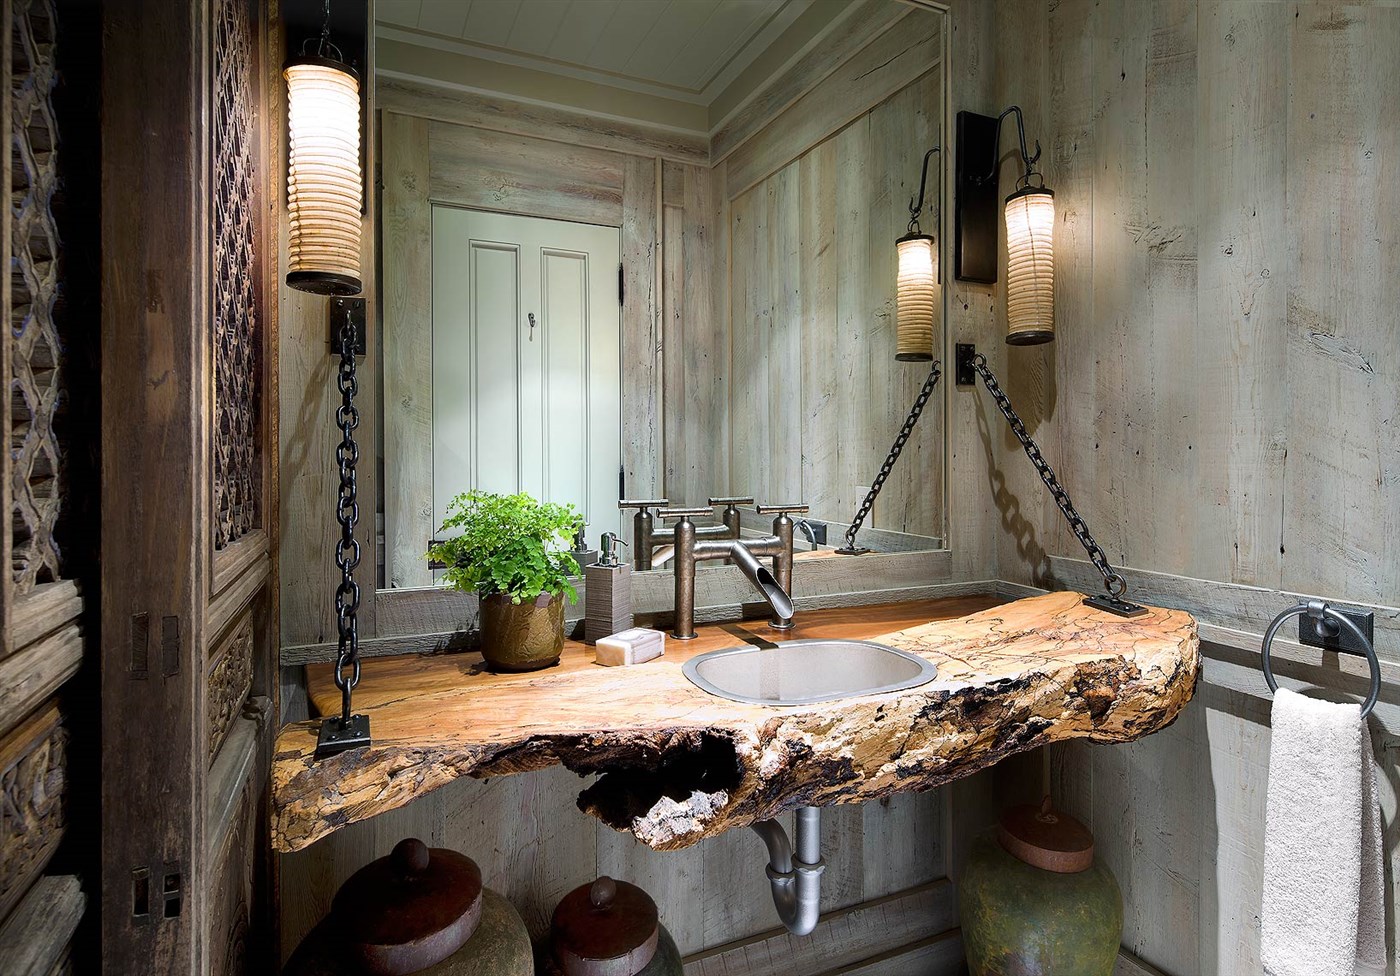 Wood in the bathroom - a unique rustic interior